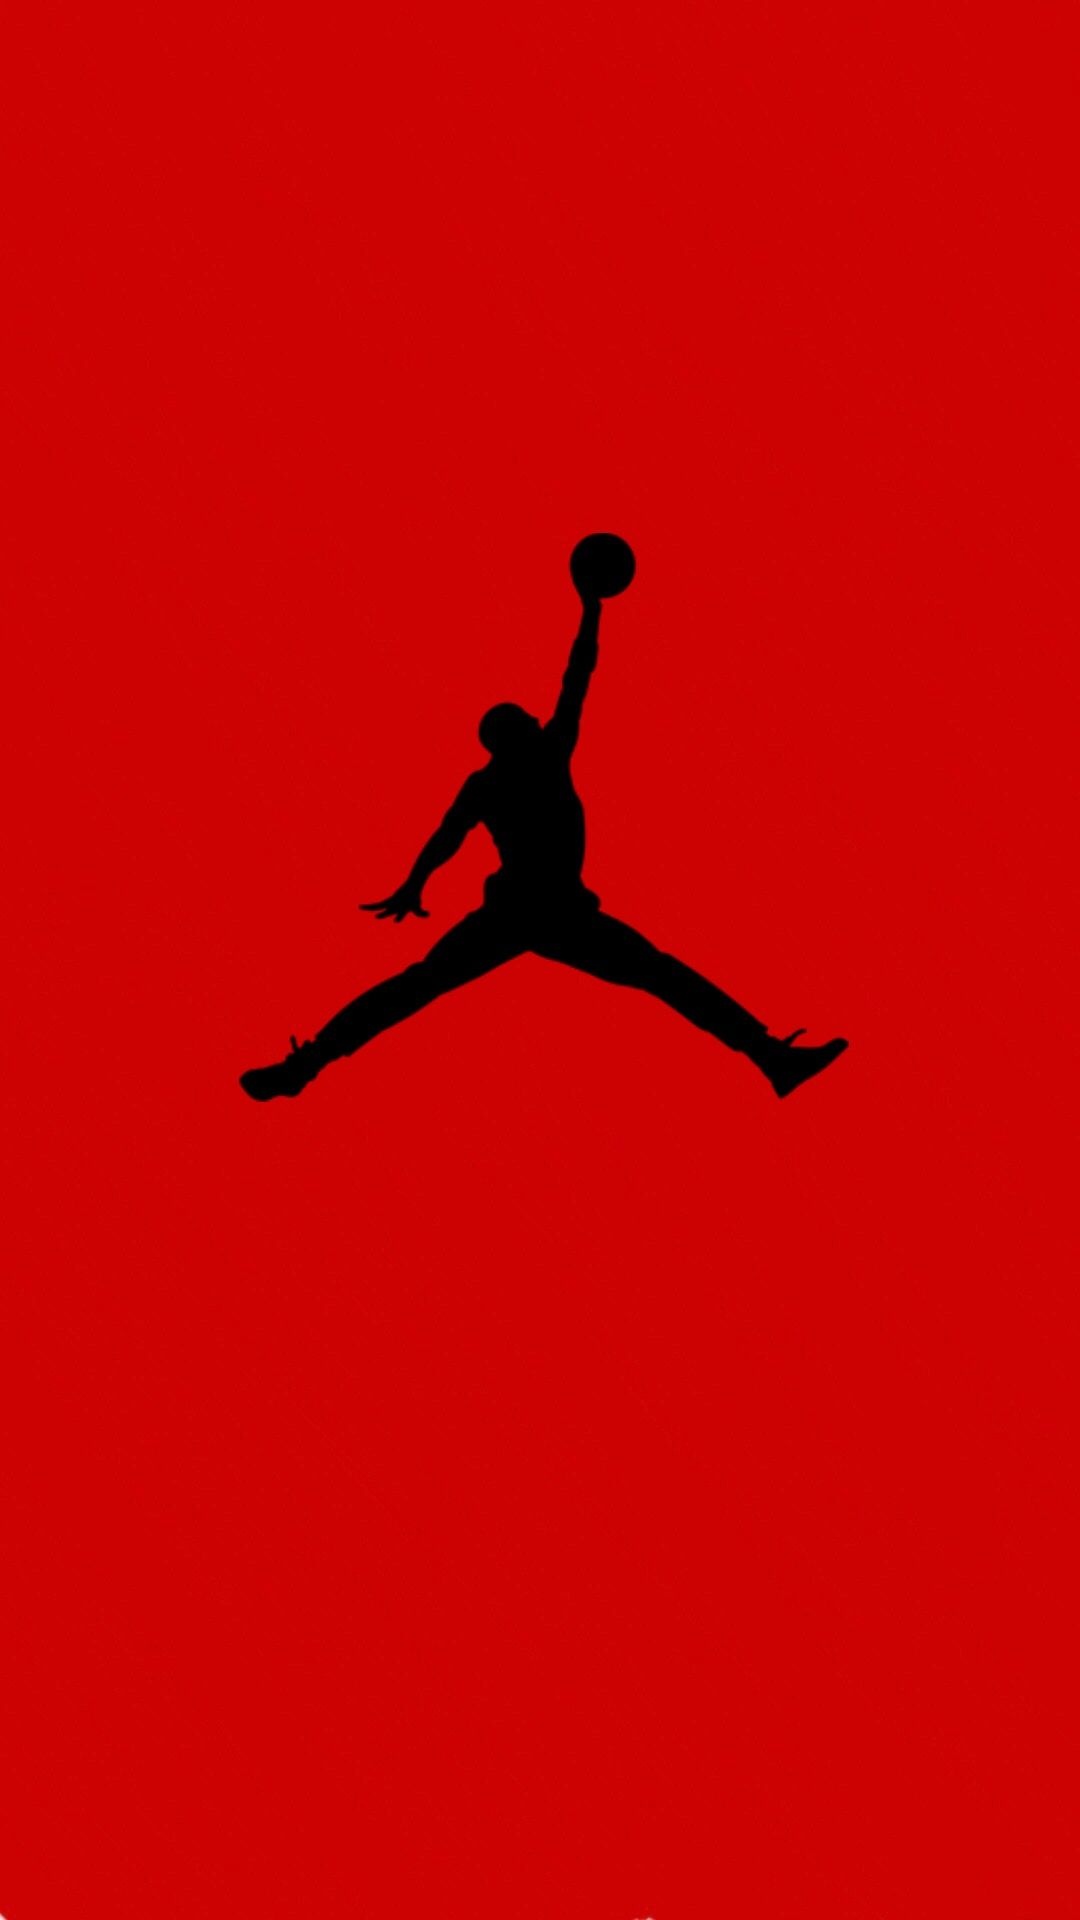 Jumpman Logo, Air Jordan logo, Background wallpapers, Sneaker fans, 1080x1920 Full HD Handy